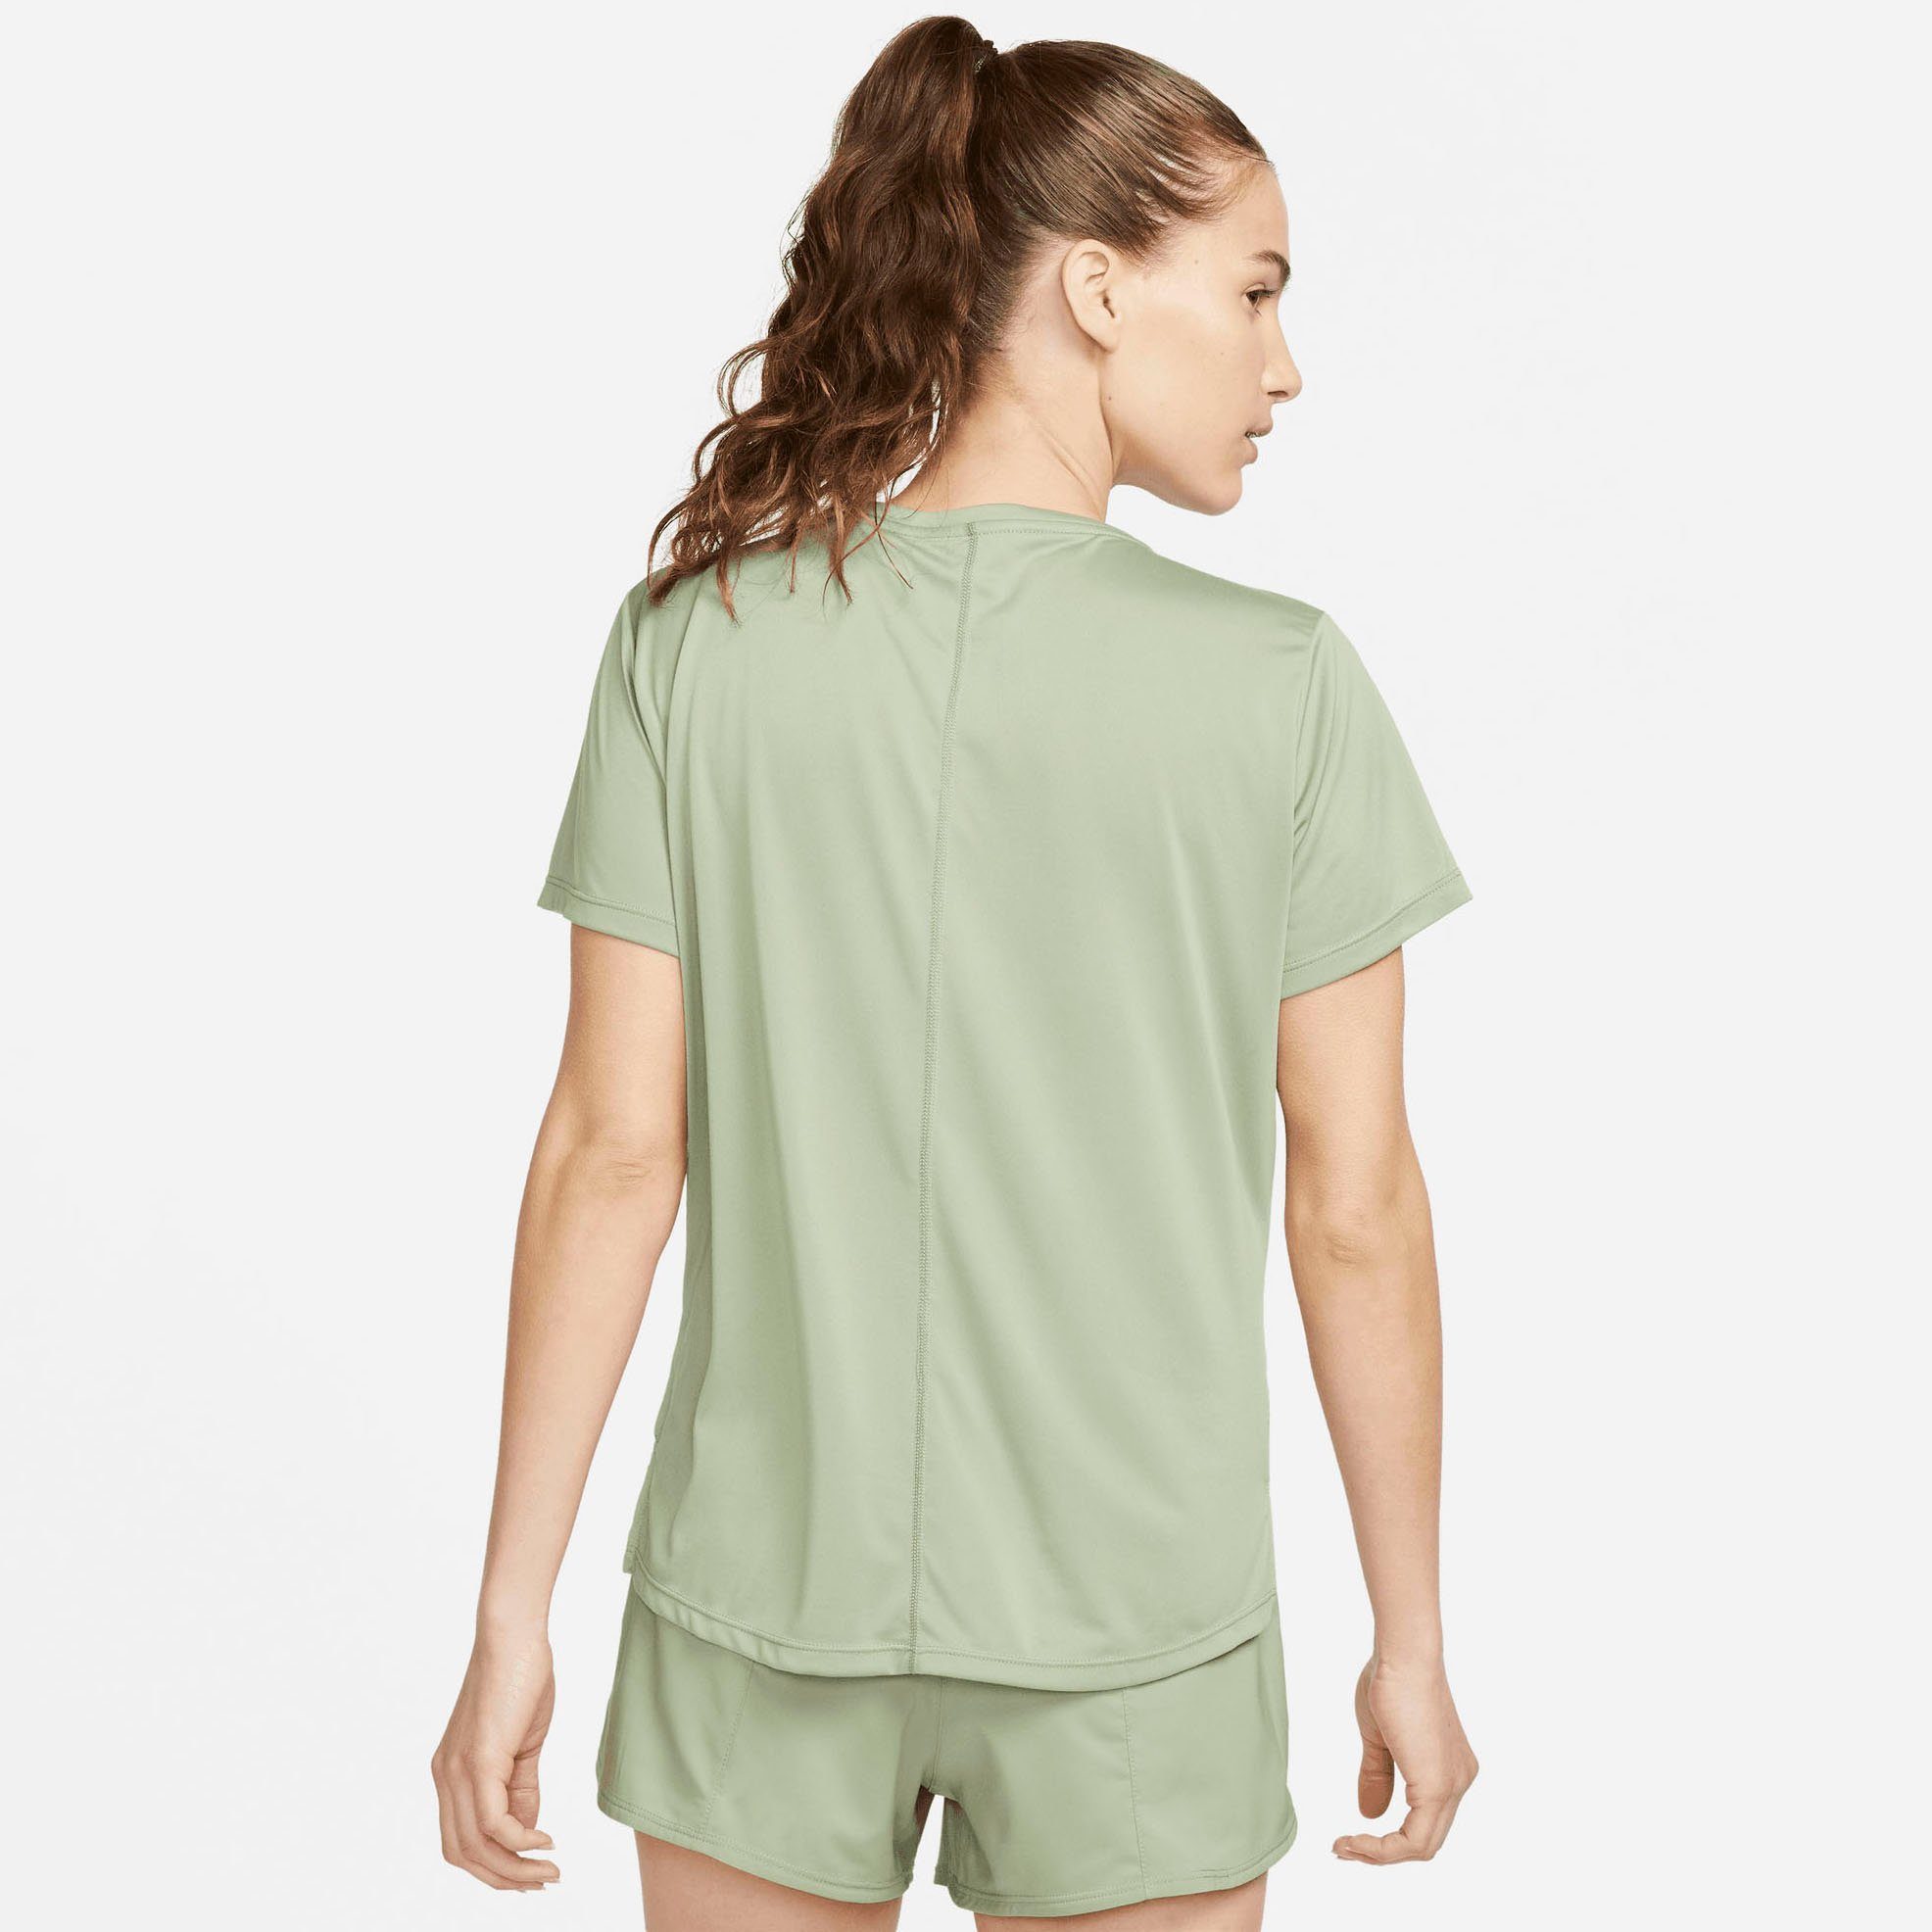 Short-Sleeved Nike Women's Swoosh Laufshirt Top Dri-FIT grün One